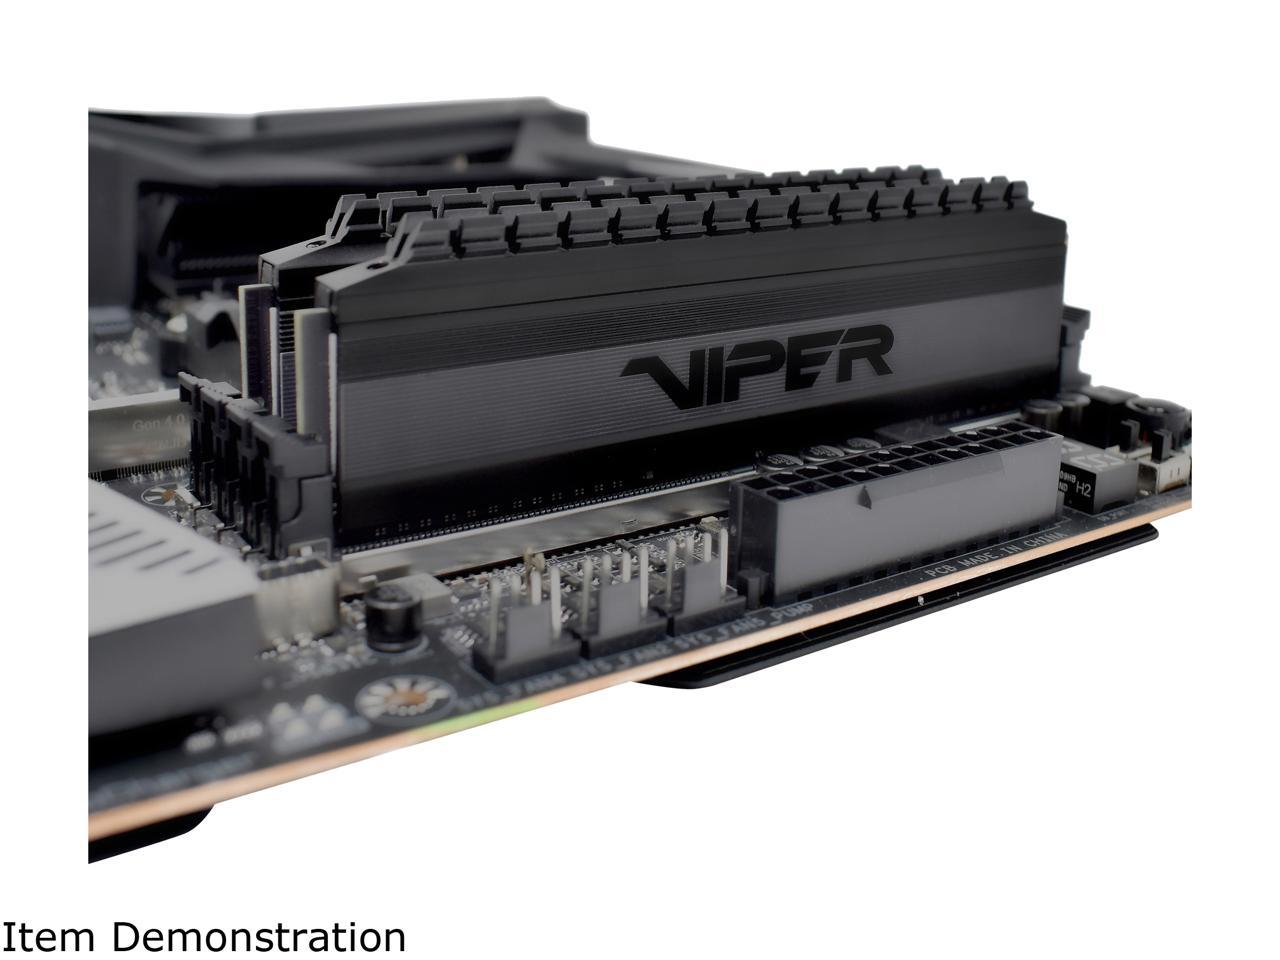 Patriot Viper 4 Blackout Series 8GB (2 x 4GB) 288-Pin DDR4 SDRAM DDR4 3000 (PC4 24000) AMD Compatible Desktop Memory Model PVB48G300C6K